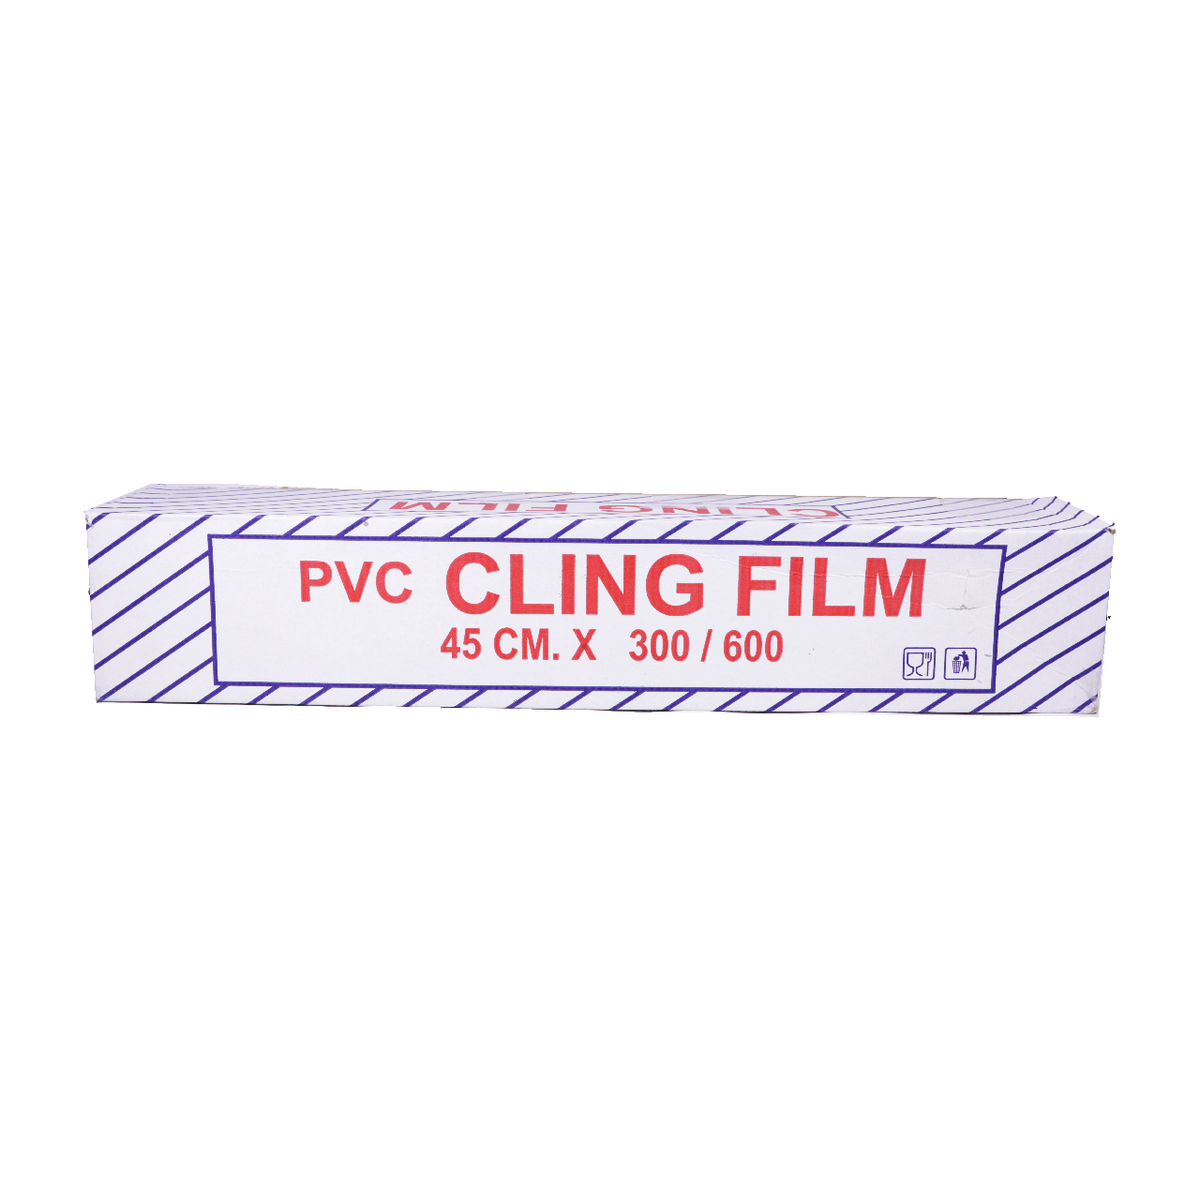 Cling Film PVC 45CM – Adeeg.com by Hayat Market